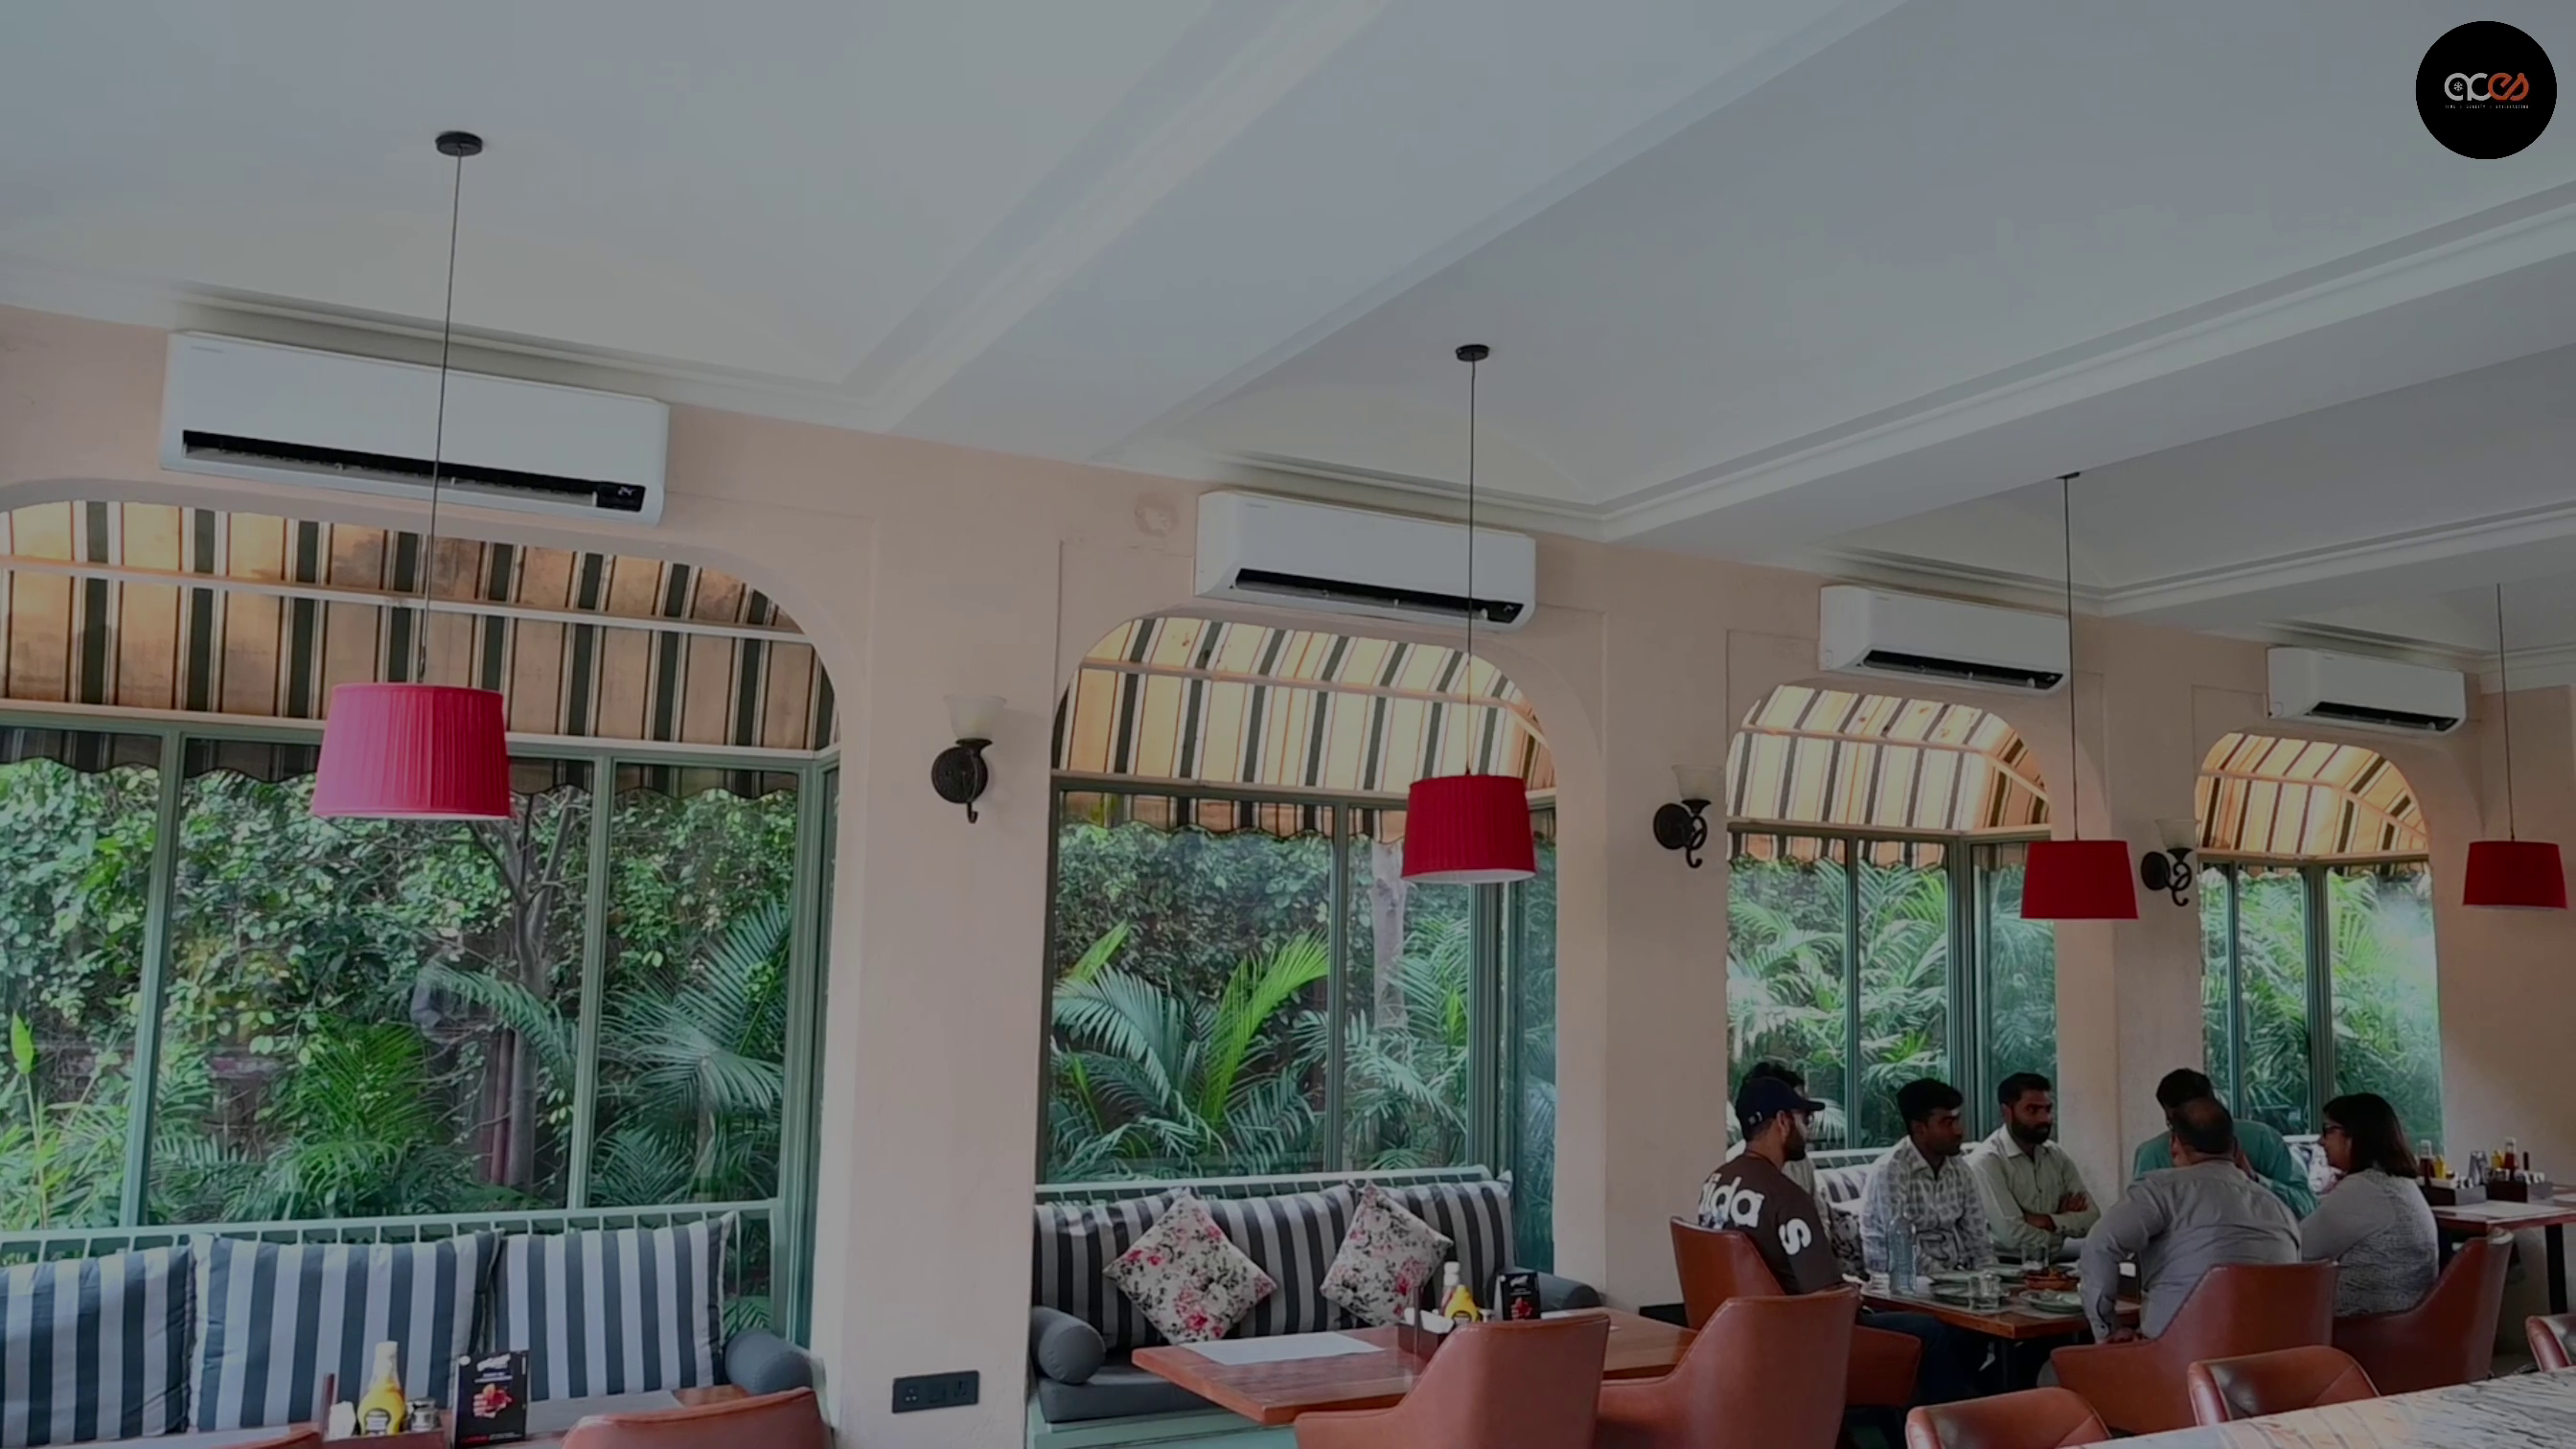 A Series of Samsung Split AC Installed in Clock Tower Restaurant In Jaipur